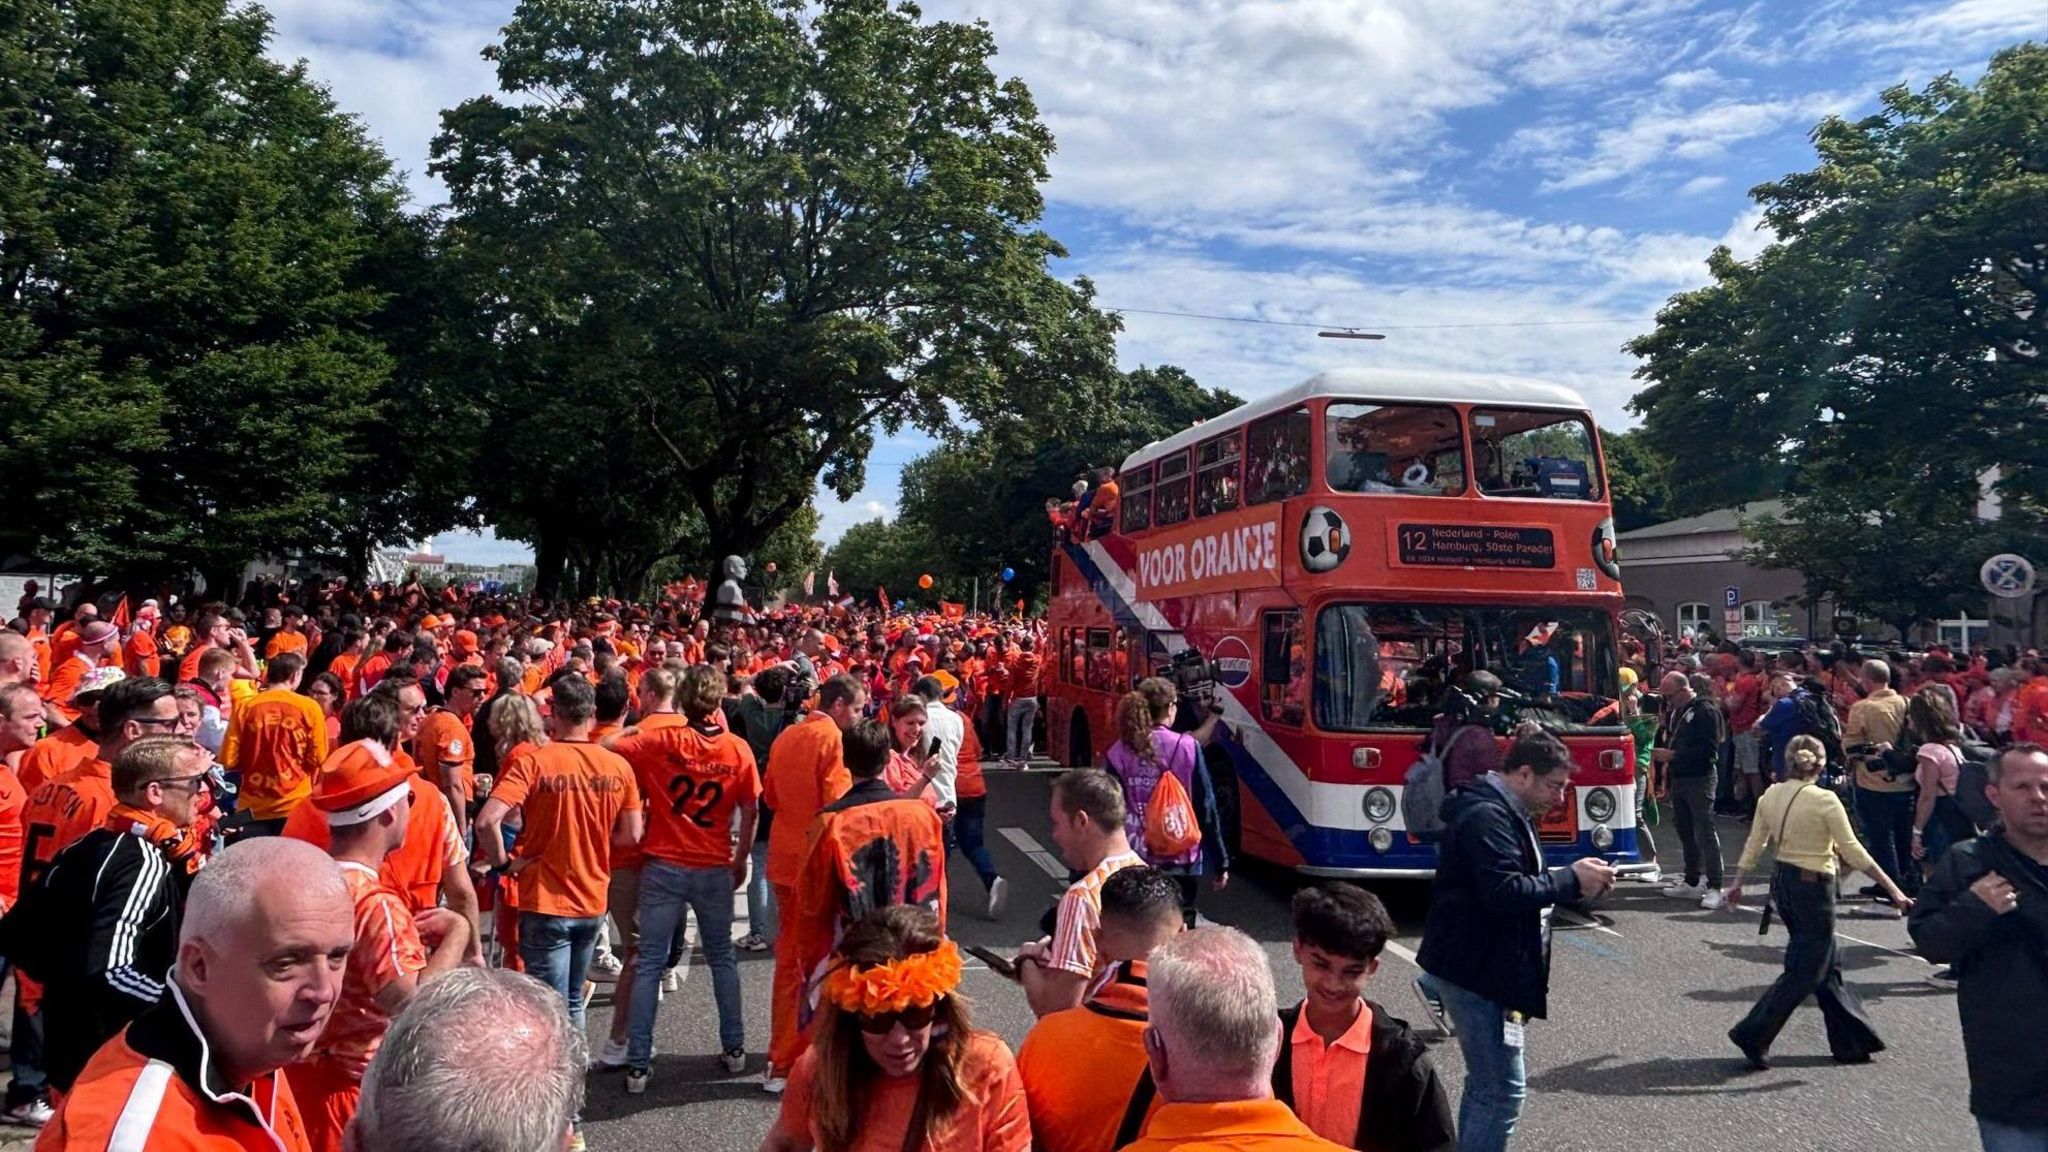 The double-decker bus that leads the Dutch fan parade